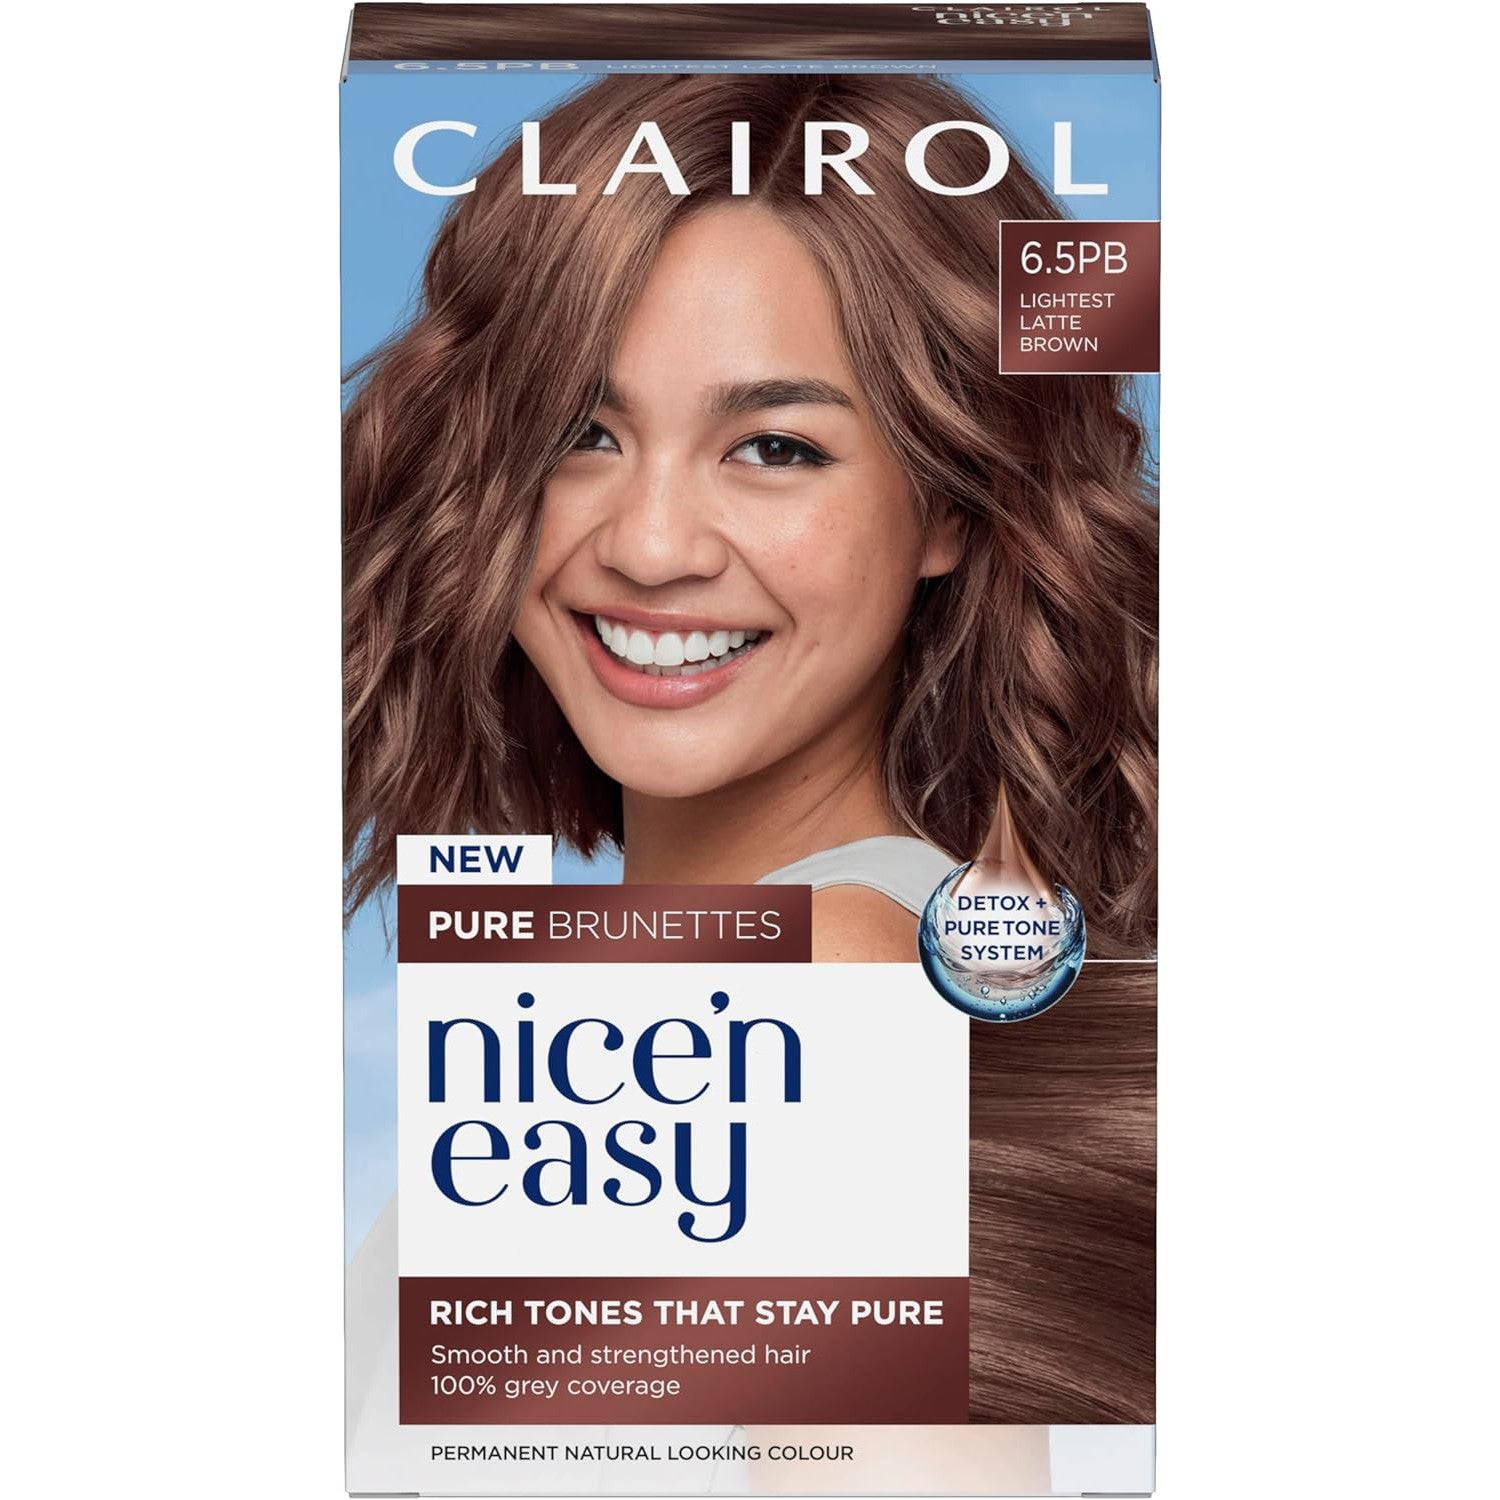 Clairol Nice n’ Easy Pure Brunettes Hair Colour 6.5PB Lightest Latte Brown , Permanent Hair Dye